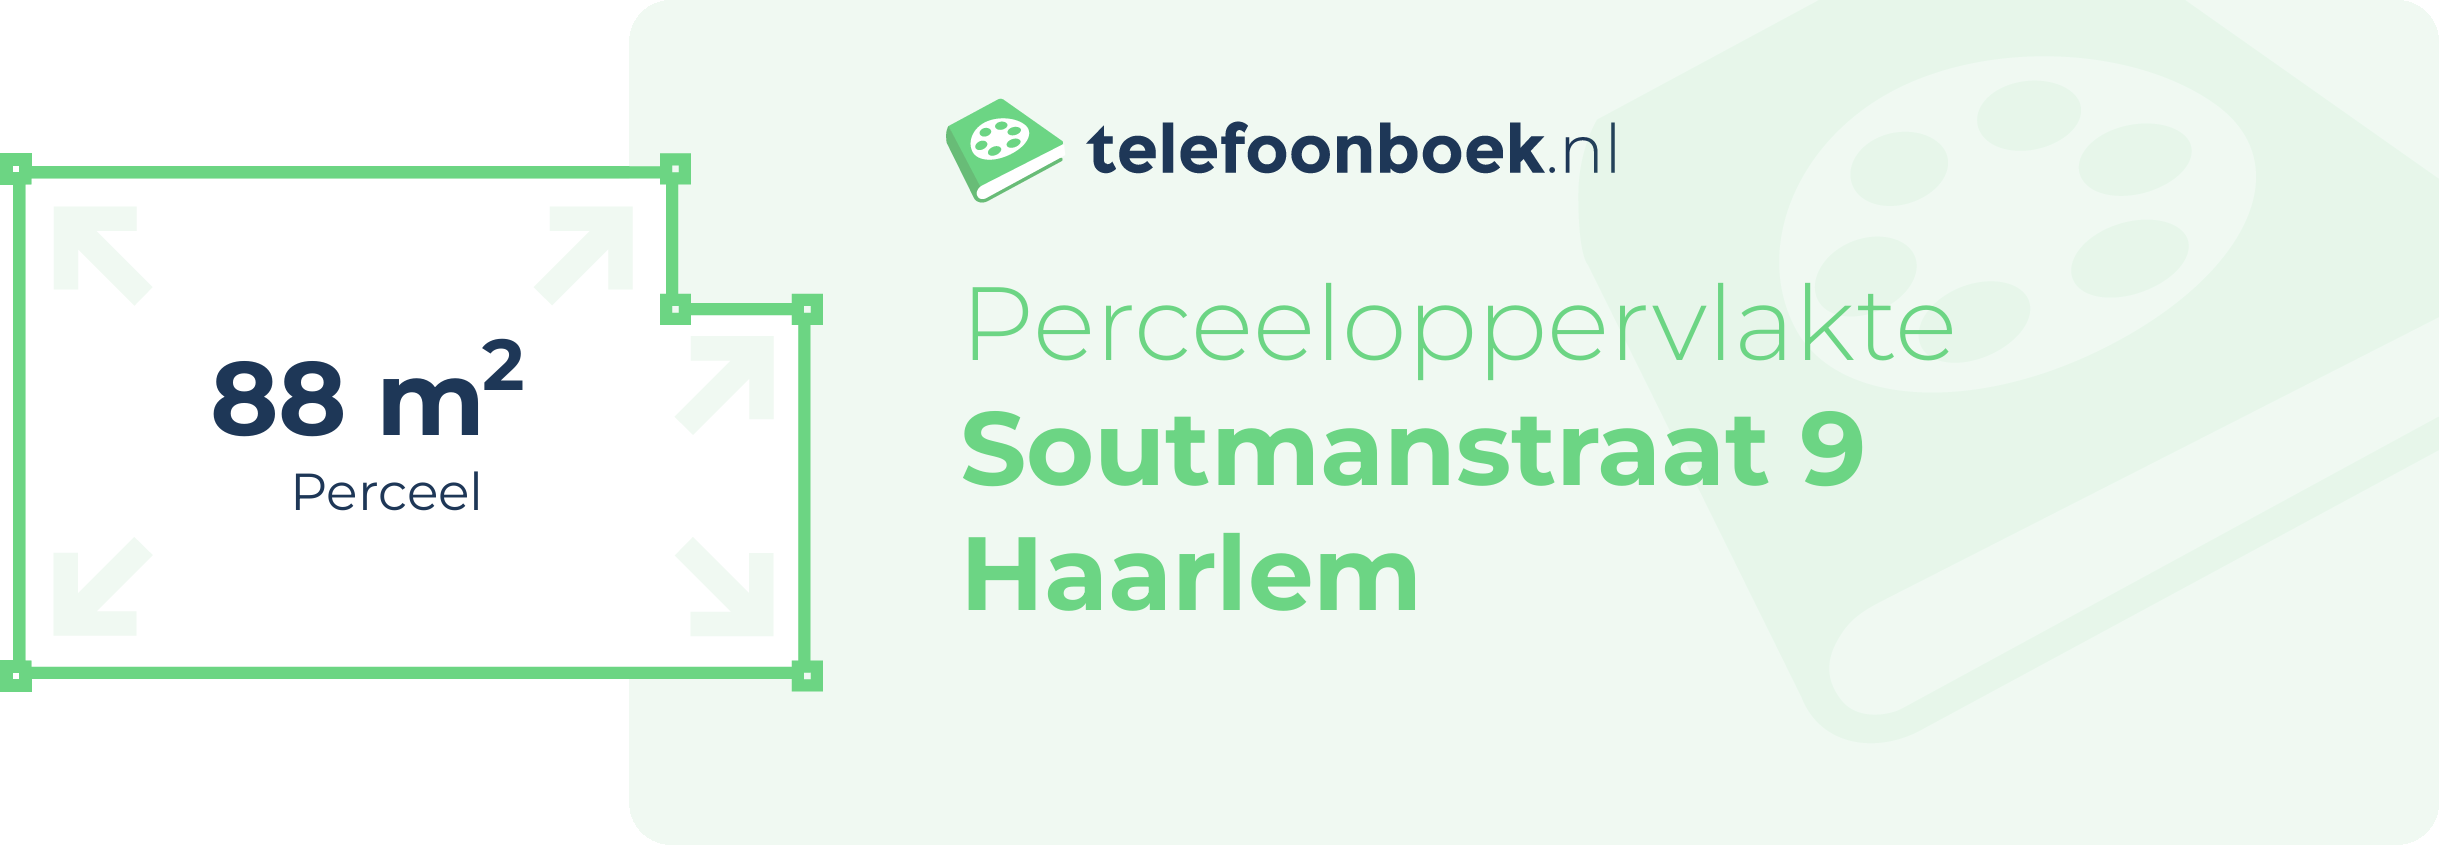 Perceeloppervlakte Soutmanstraat 9 Haarlem